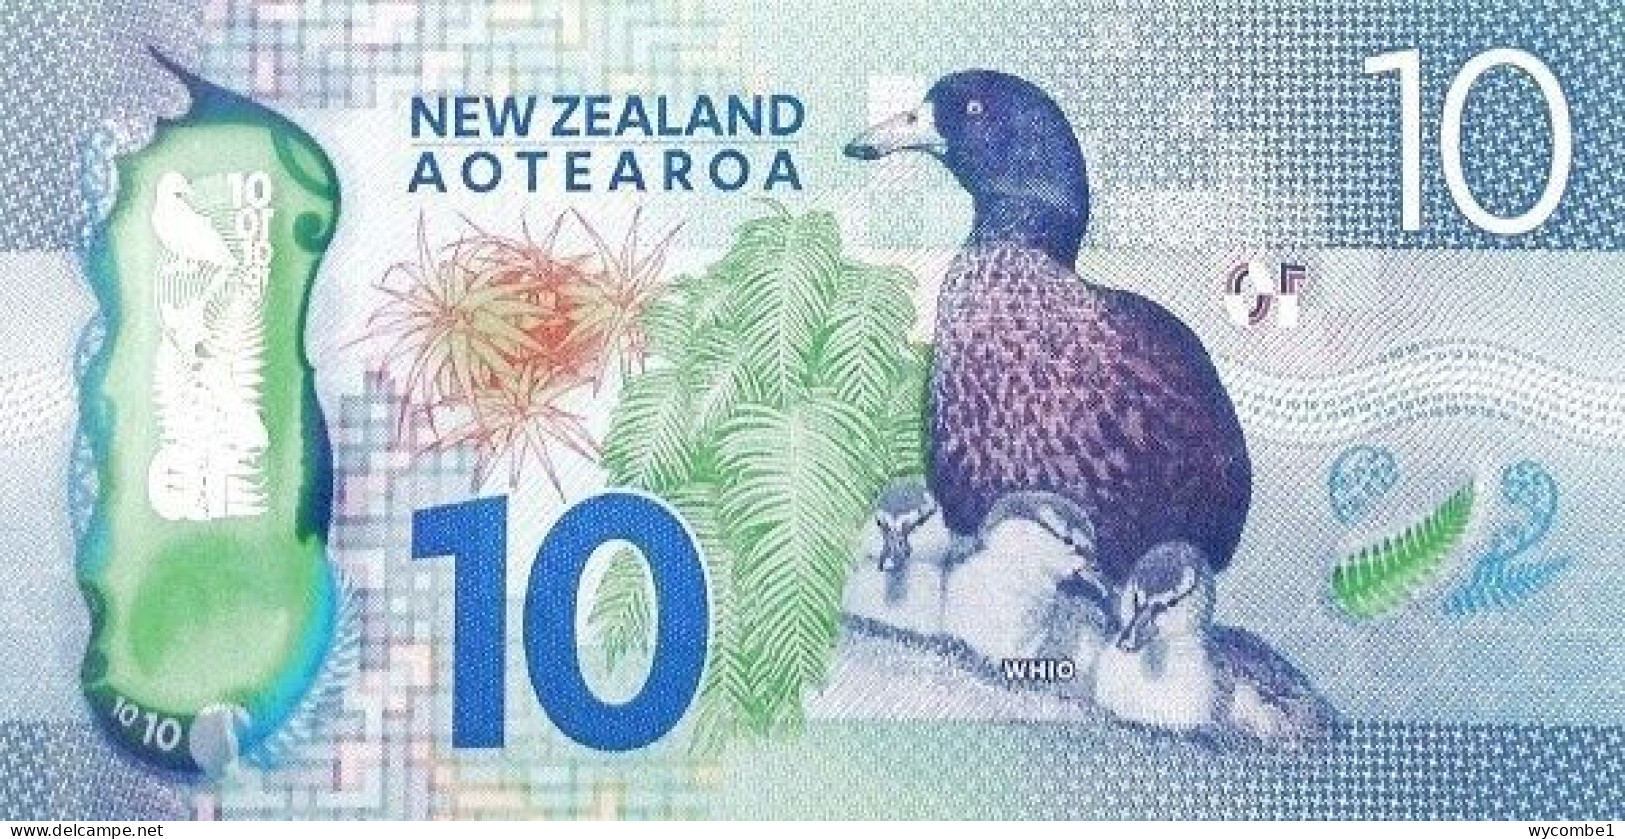 NEW ZEALAND - 2015 10 Dollars UNC - Neuseeland